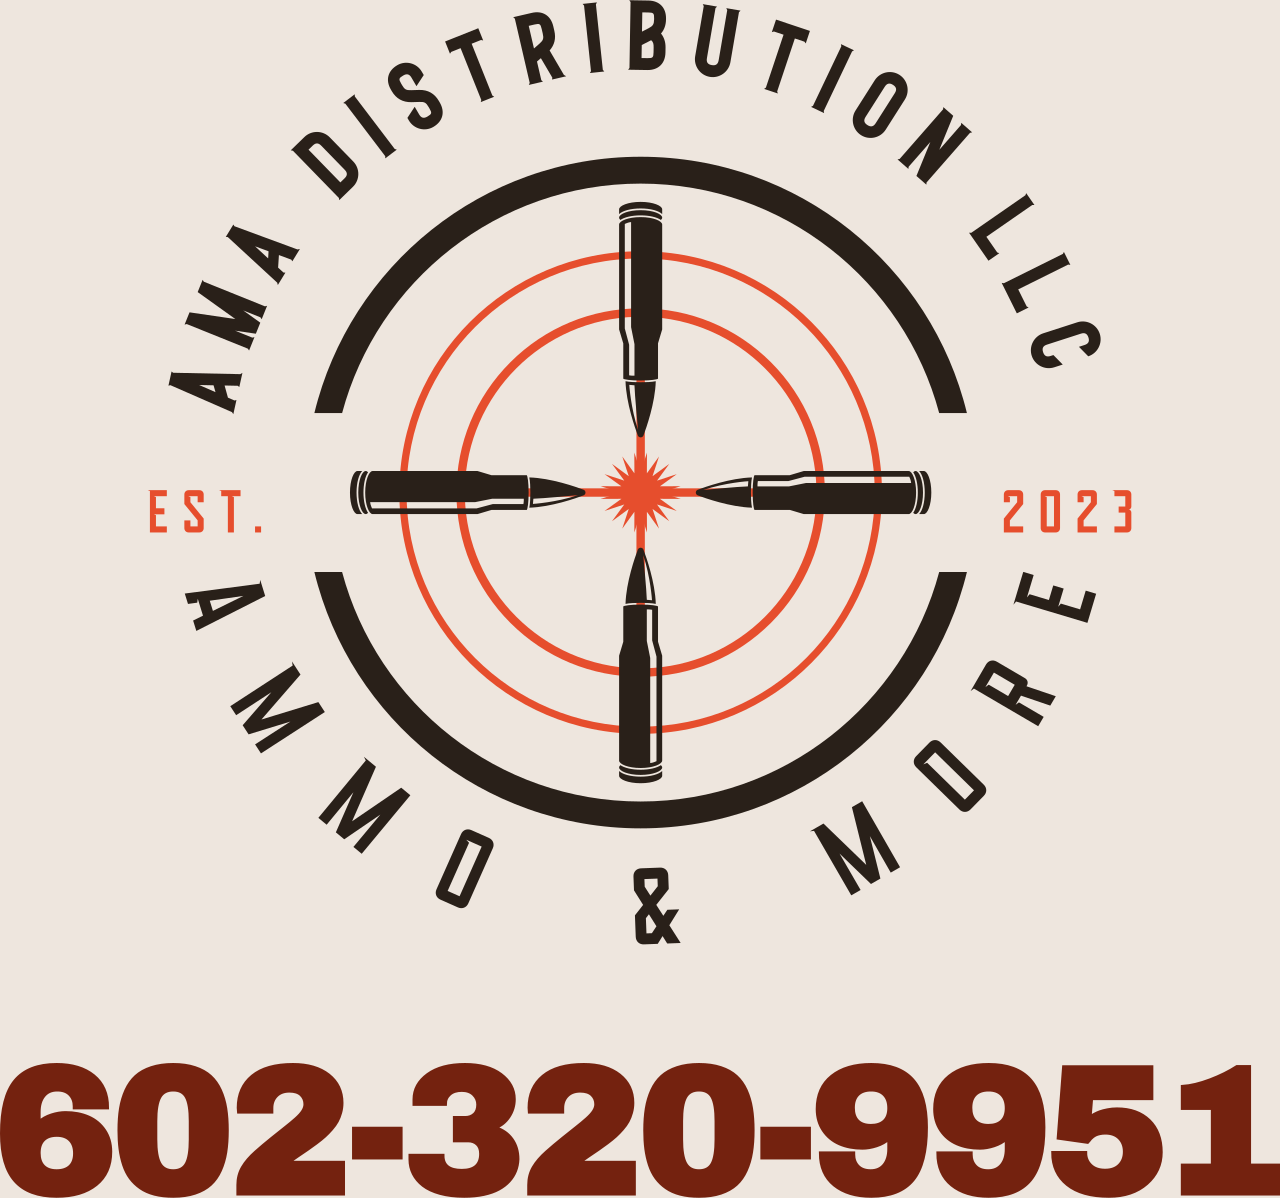 AMA DISTRIBUTION LLC 's logo